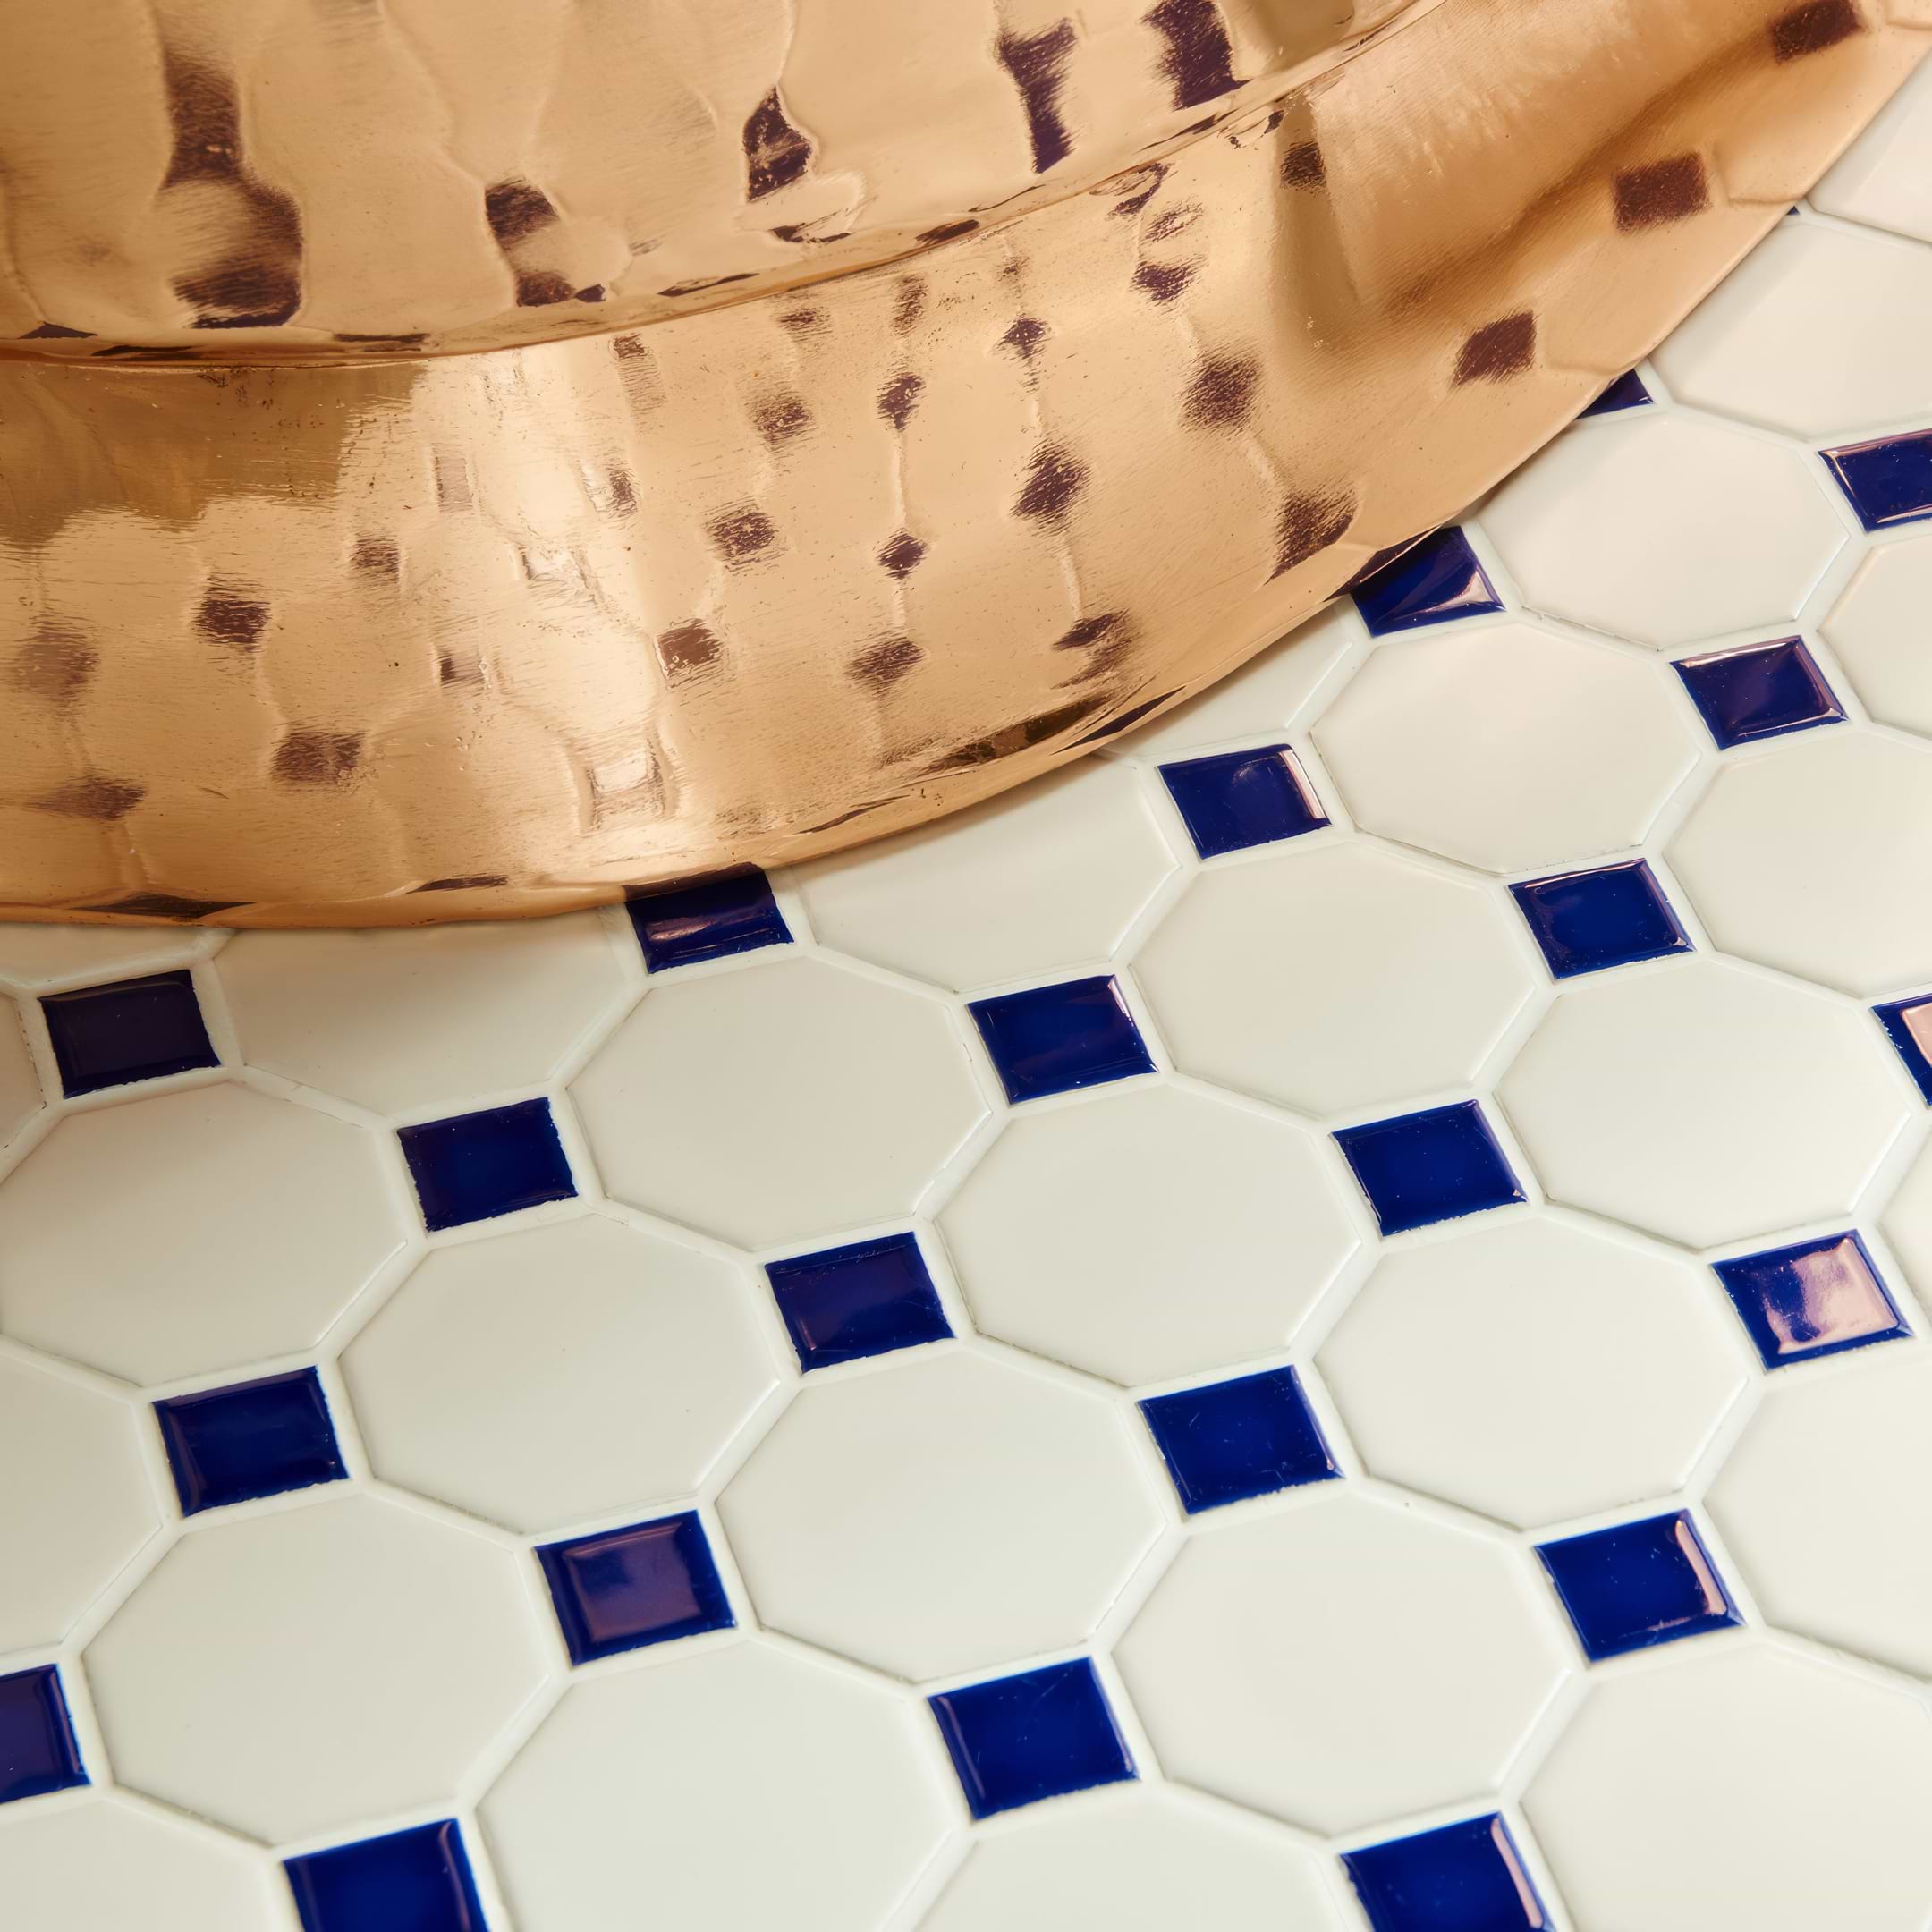 Blue Octagon & Dot Floor Mosaic